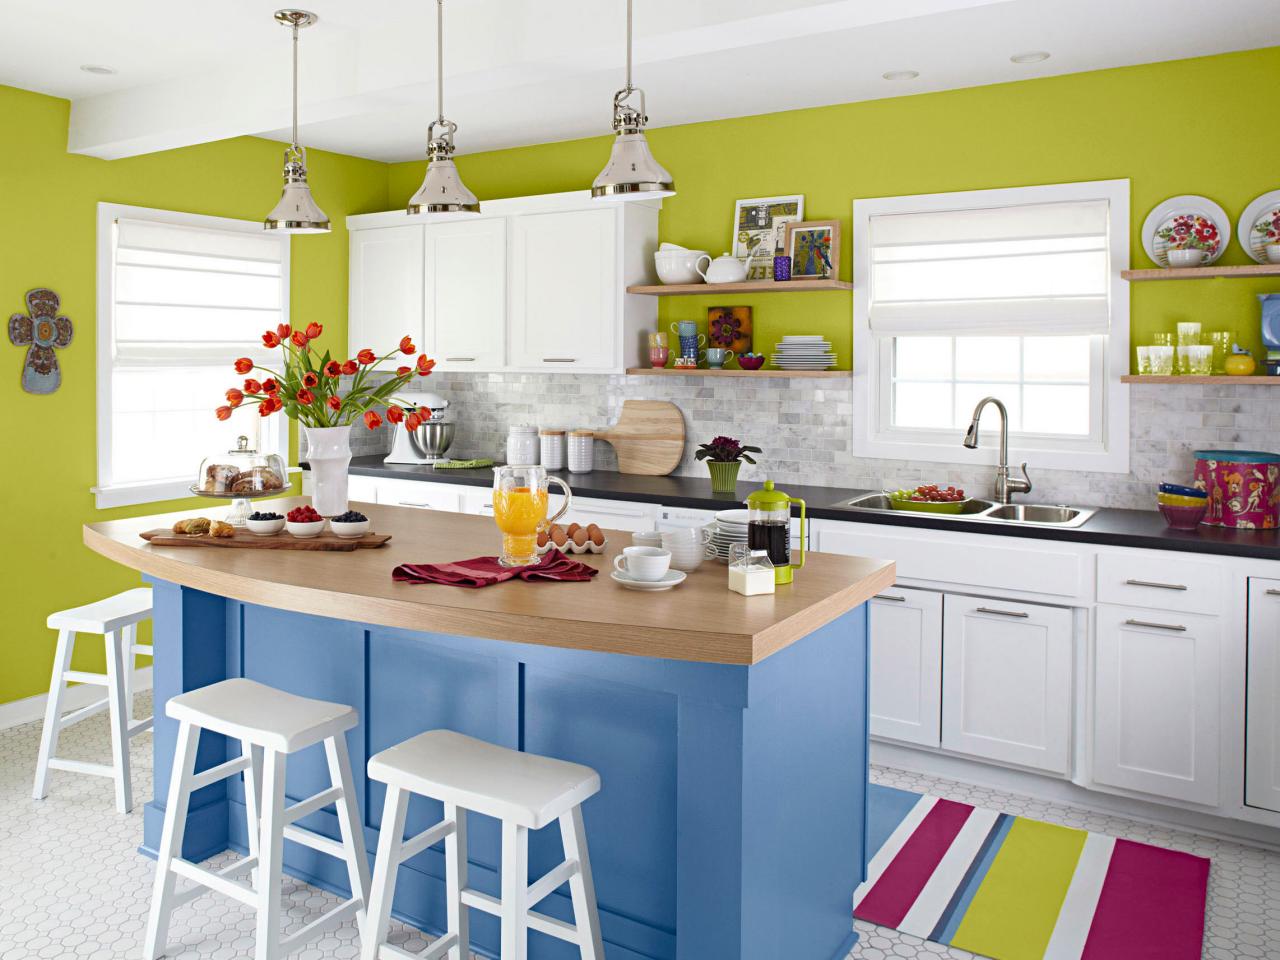 CI Lowes Creative Ideas small kitchen island s4x3.jpg.rend .hgtvcom.1280.960 1